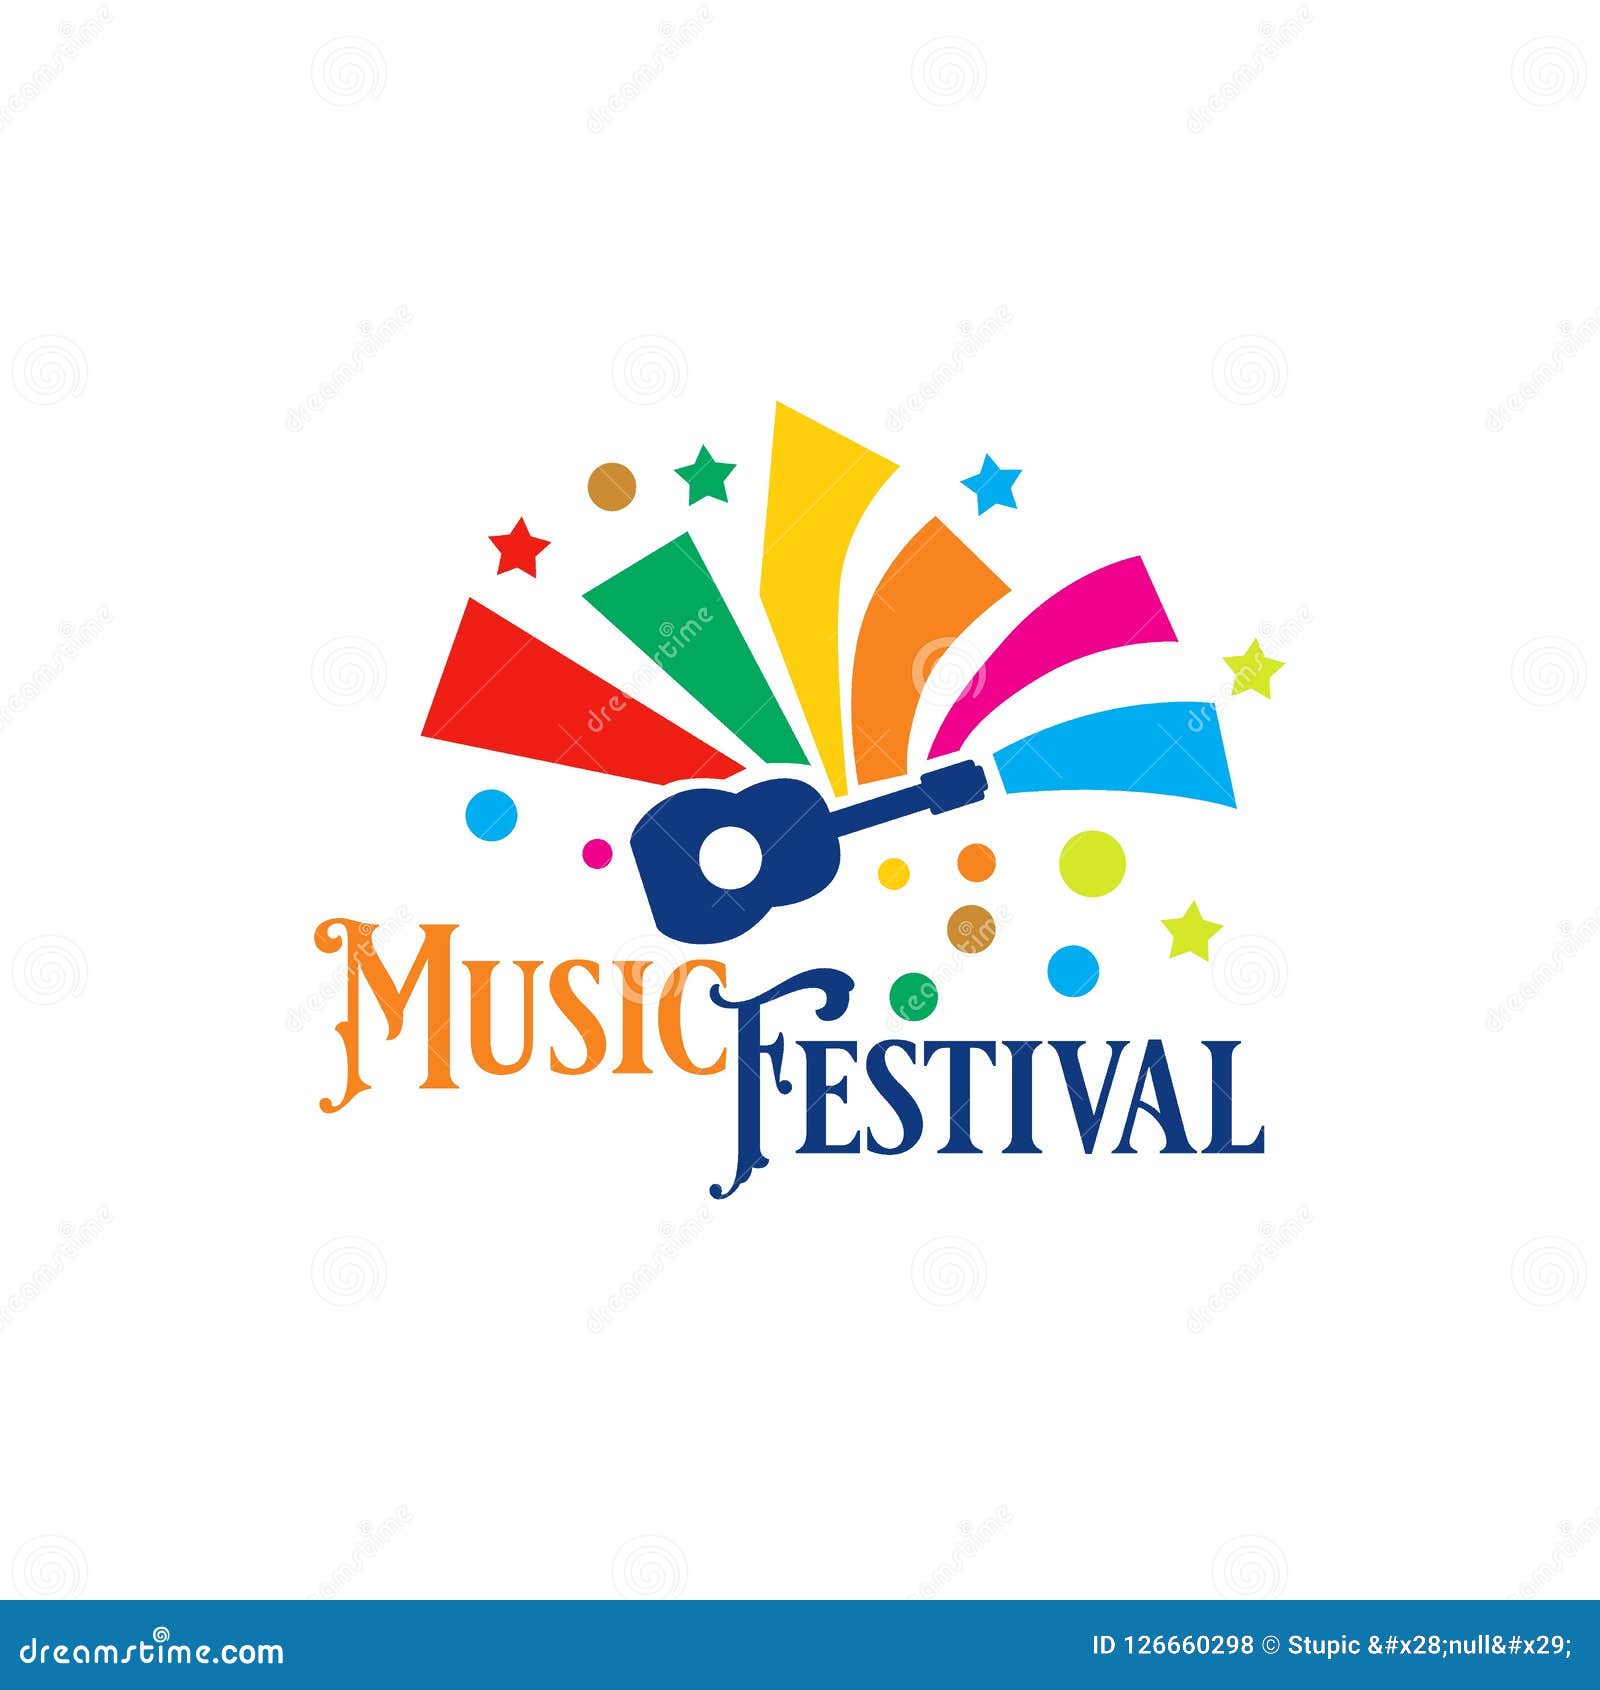 festival logo ideas 4